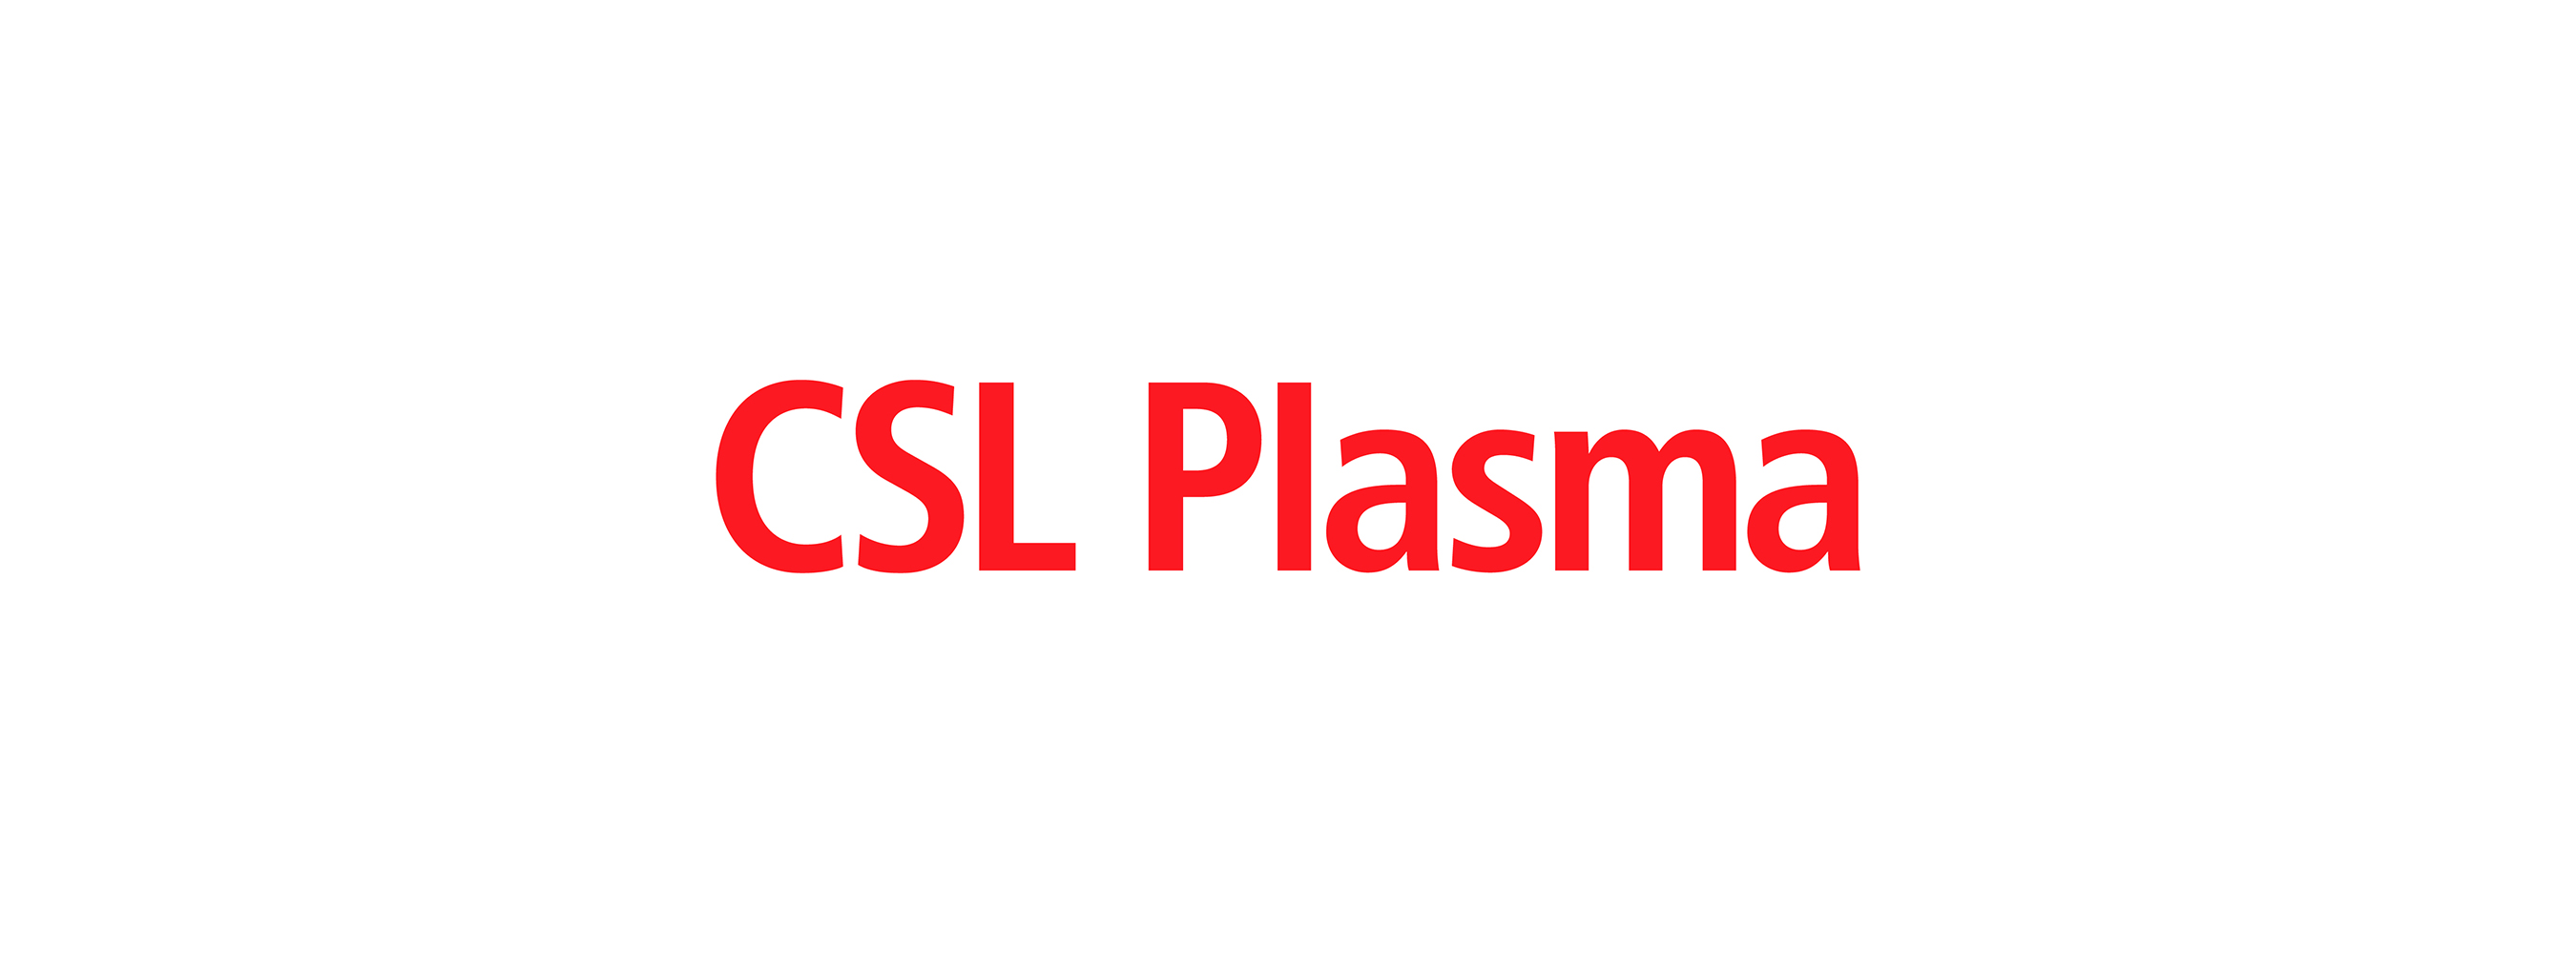 CSL Plasma Hero